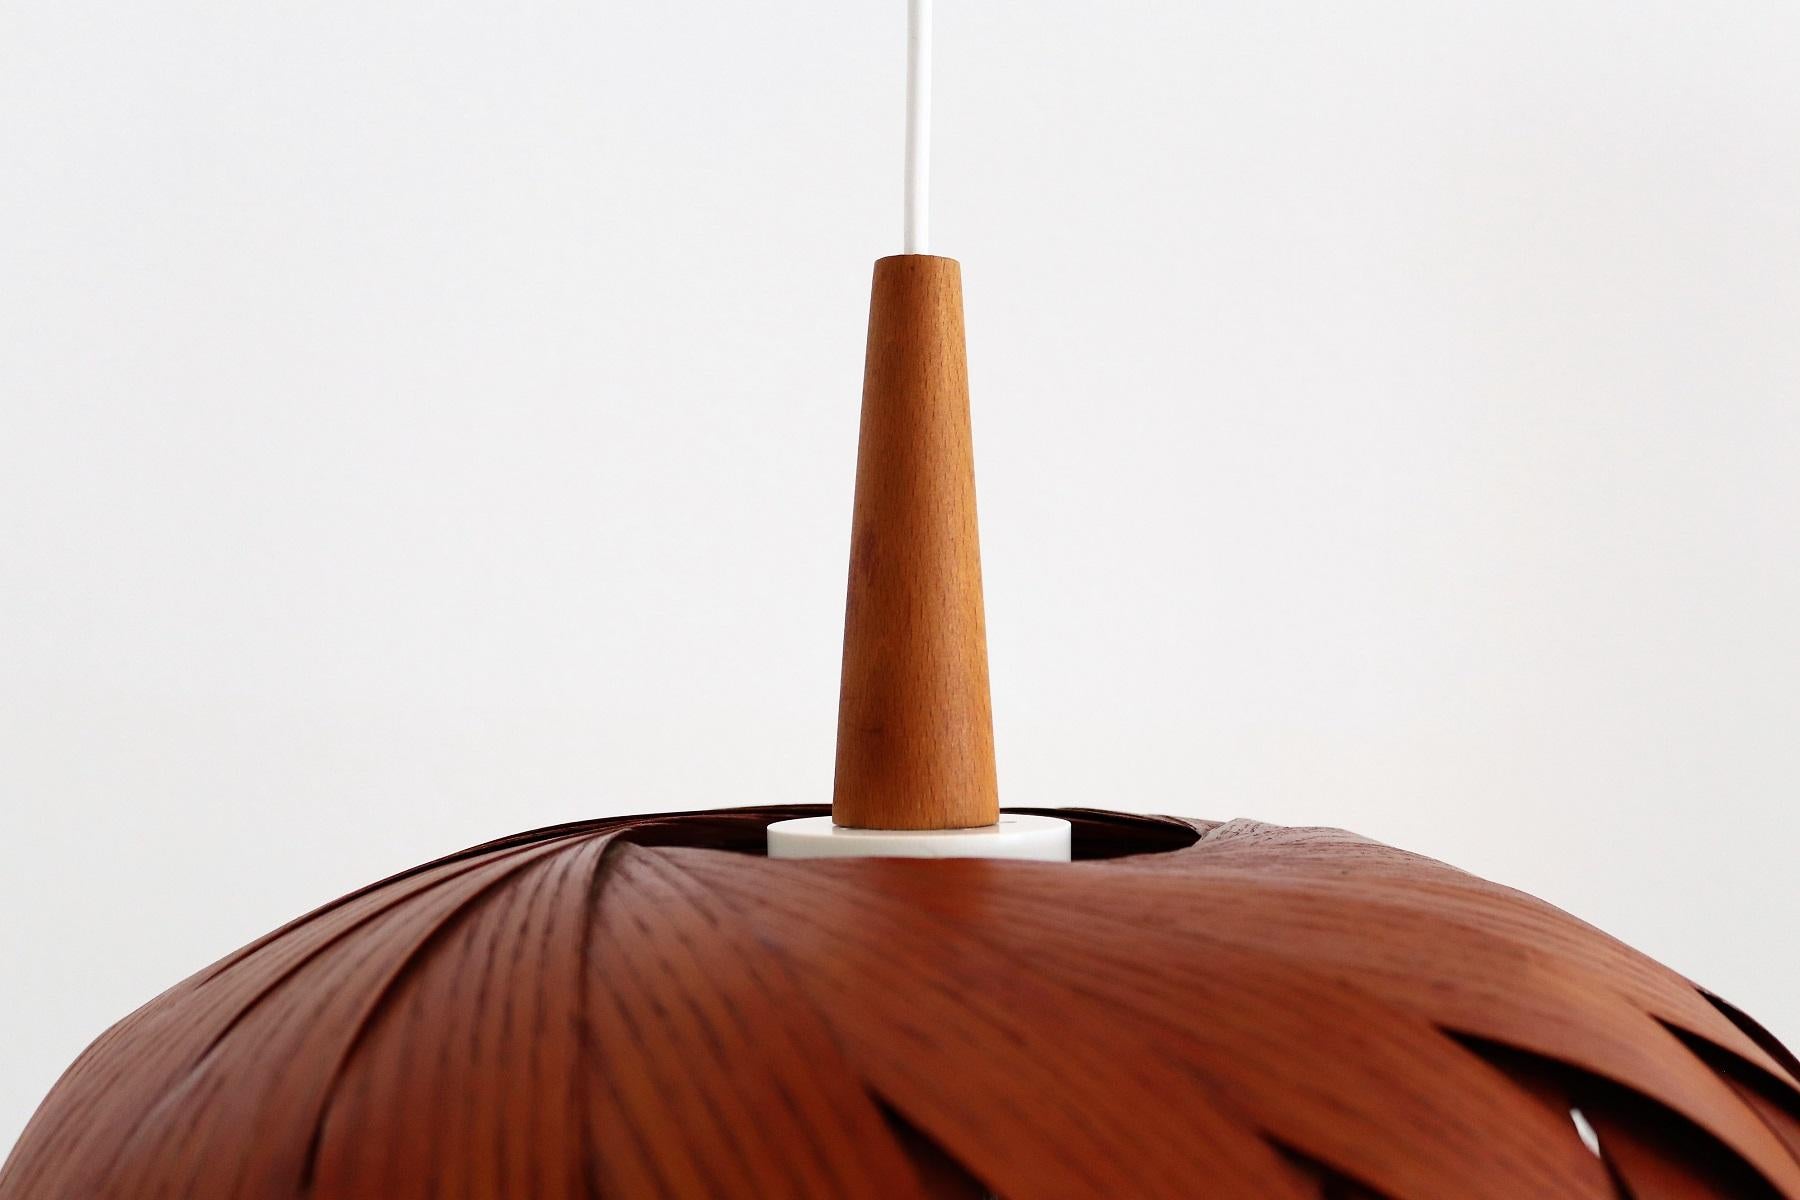 Organic Modernist Natural Teak Wood Veneer and Wicker Pendant Lamp, 1960s For Sale 5